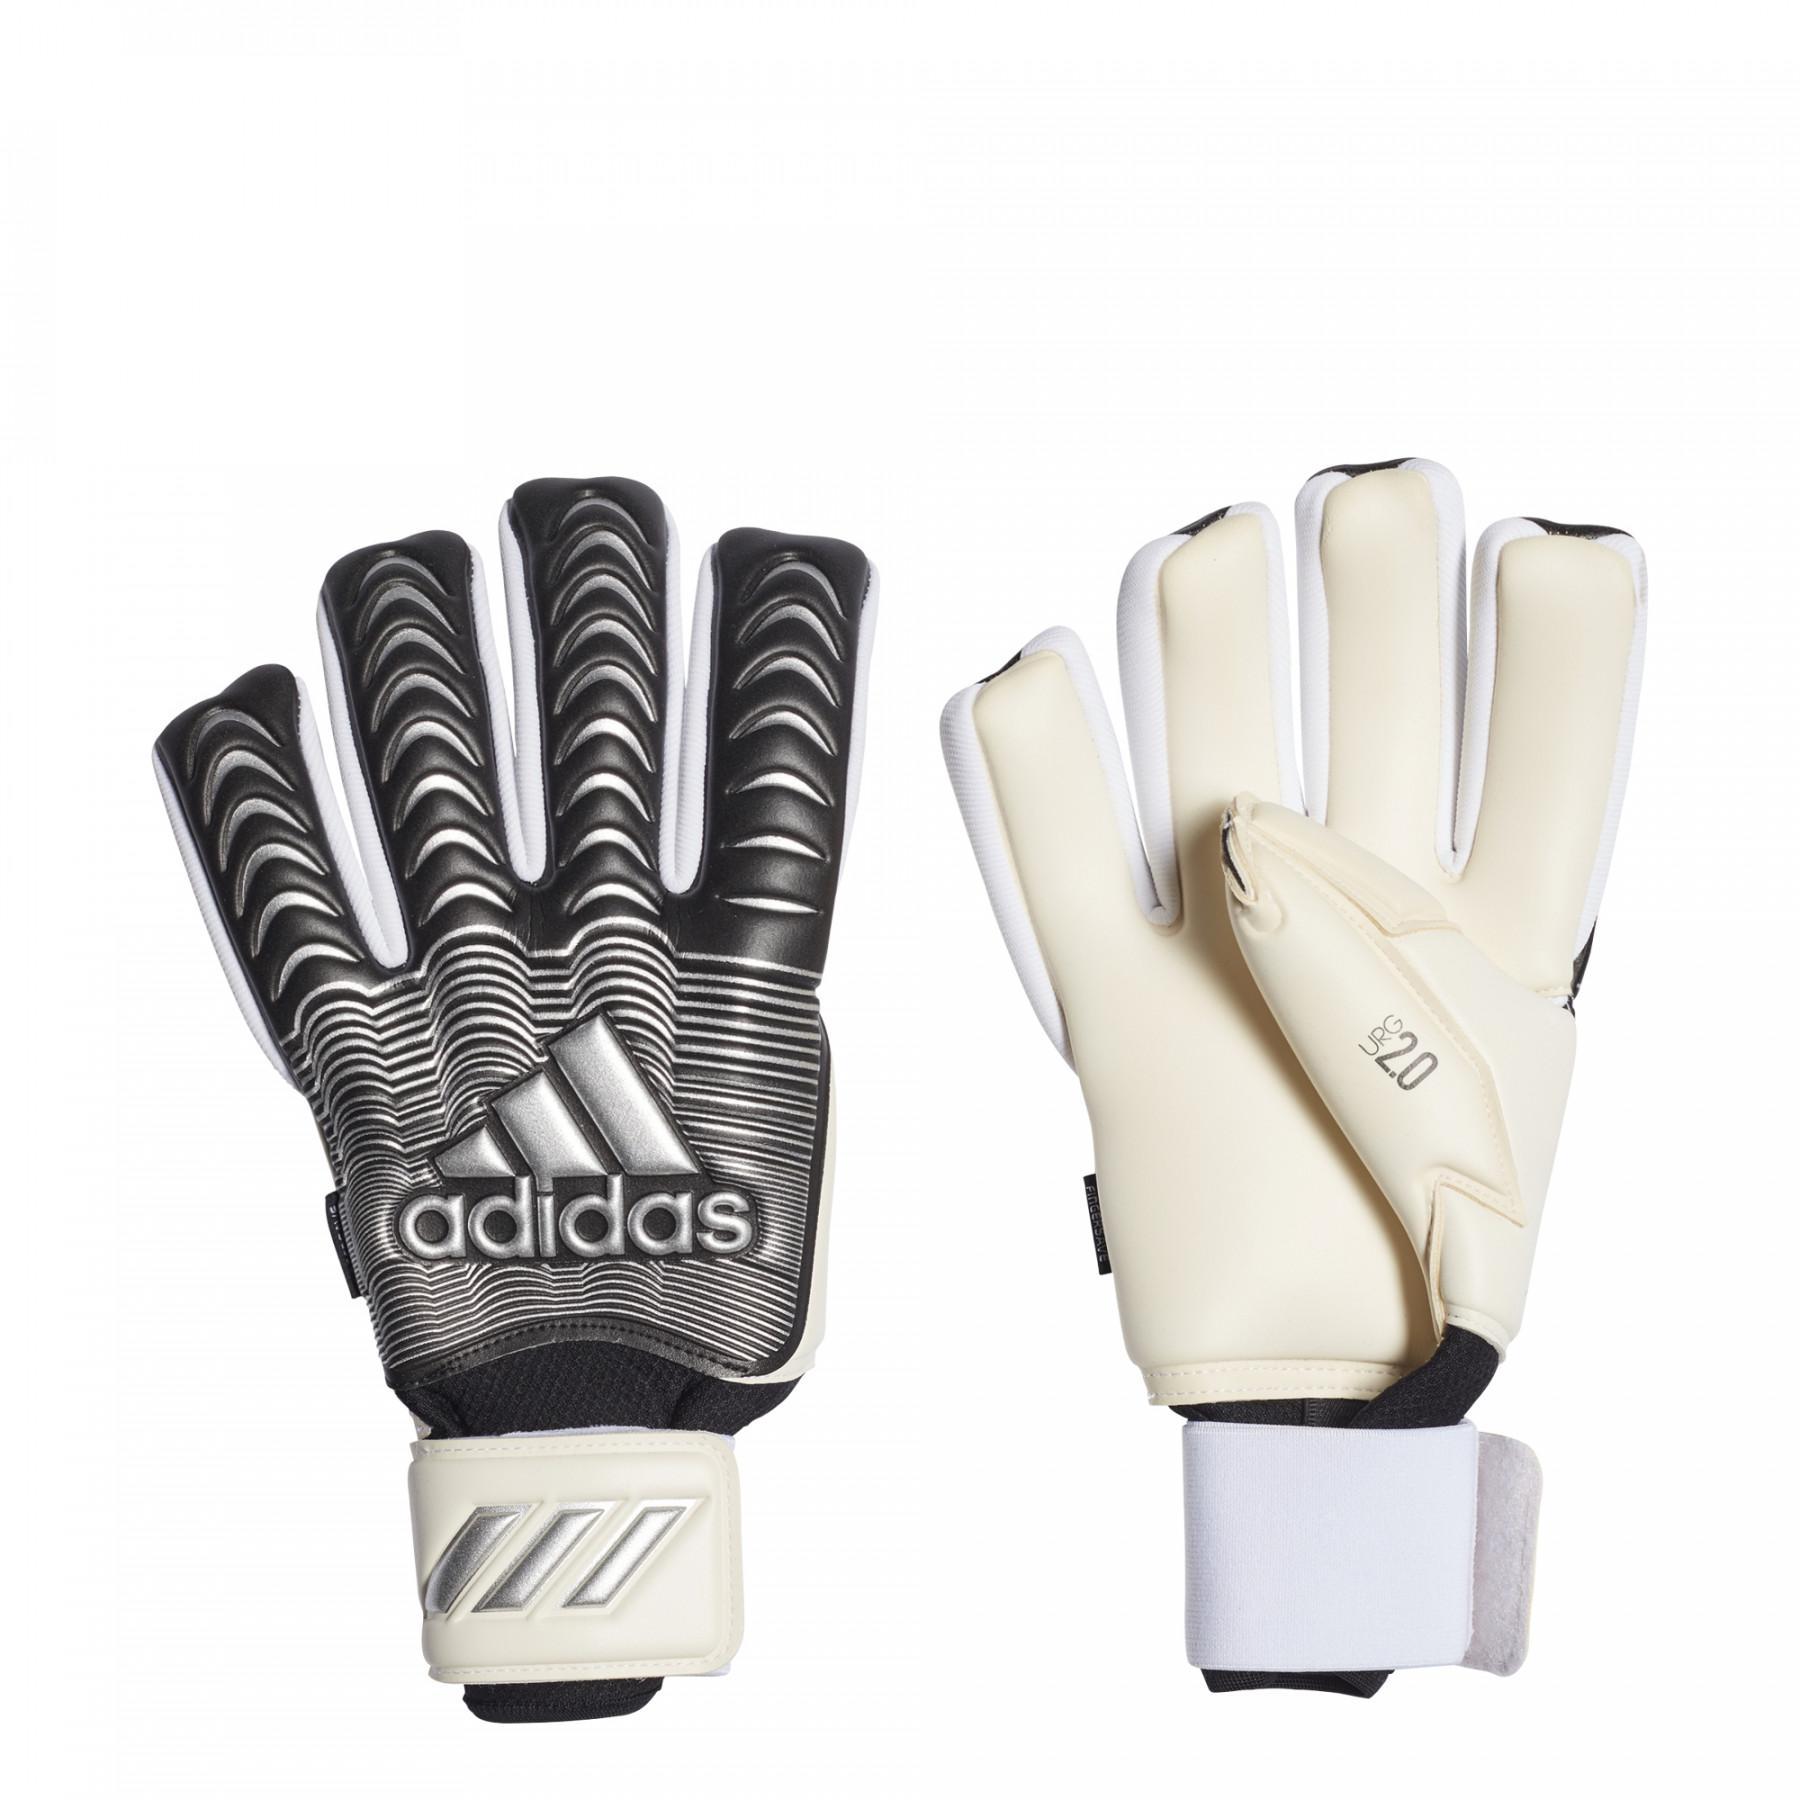 Goalkeeper gloves adidas Classic pro